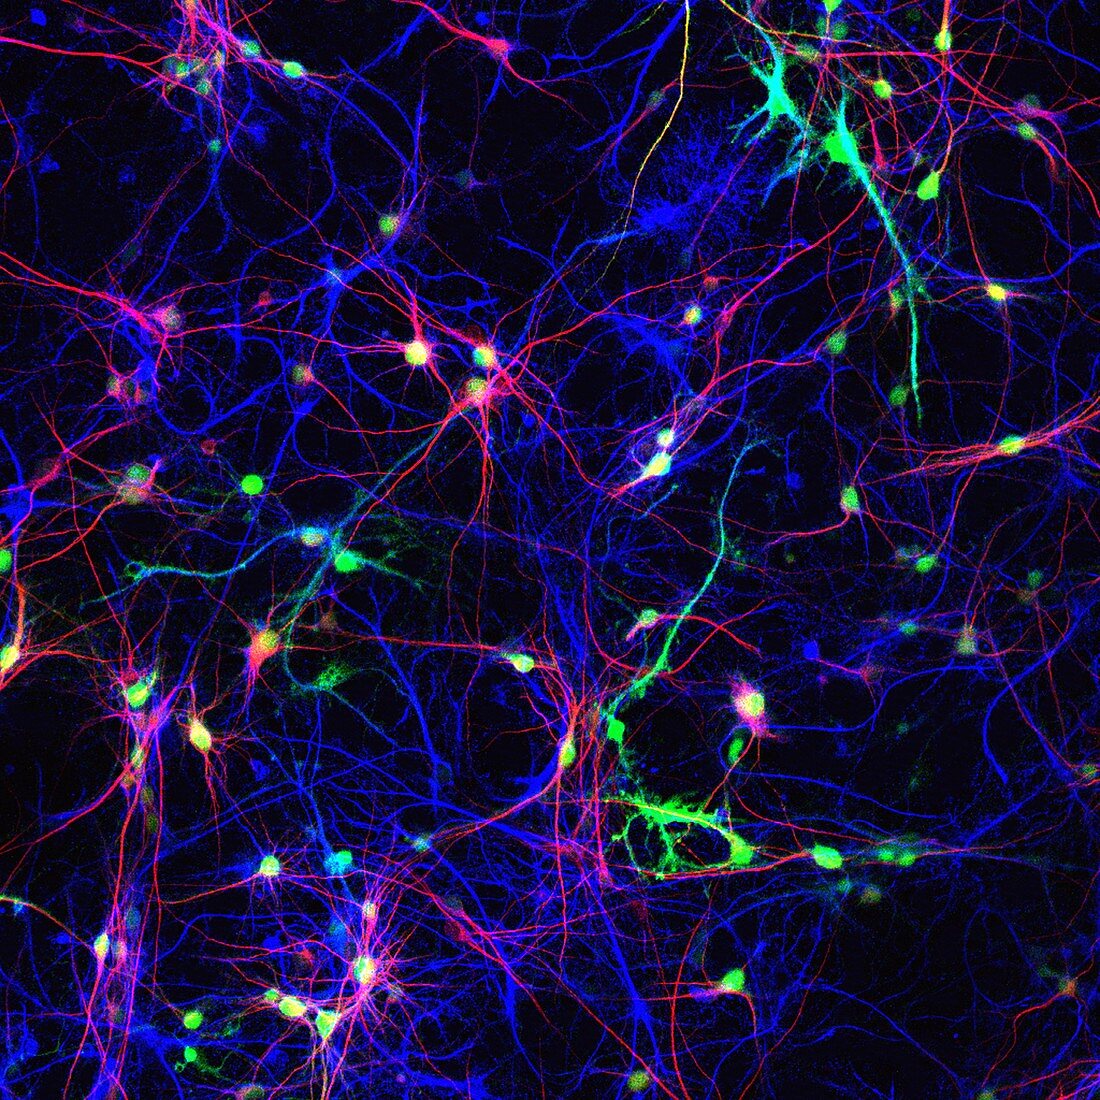 Brain nerve cells,light micrograph